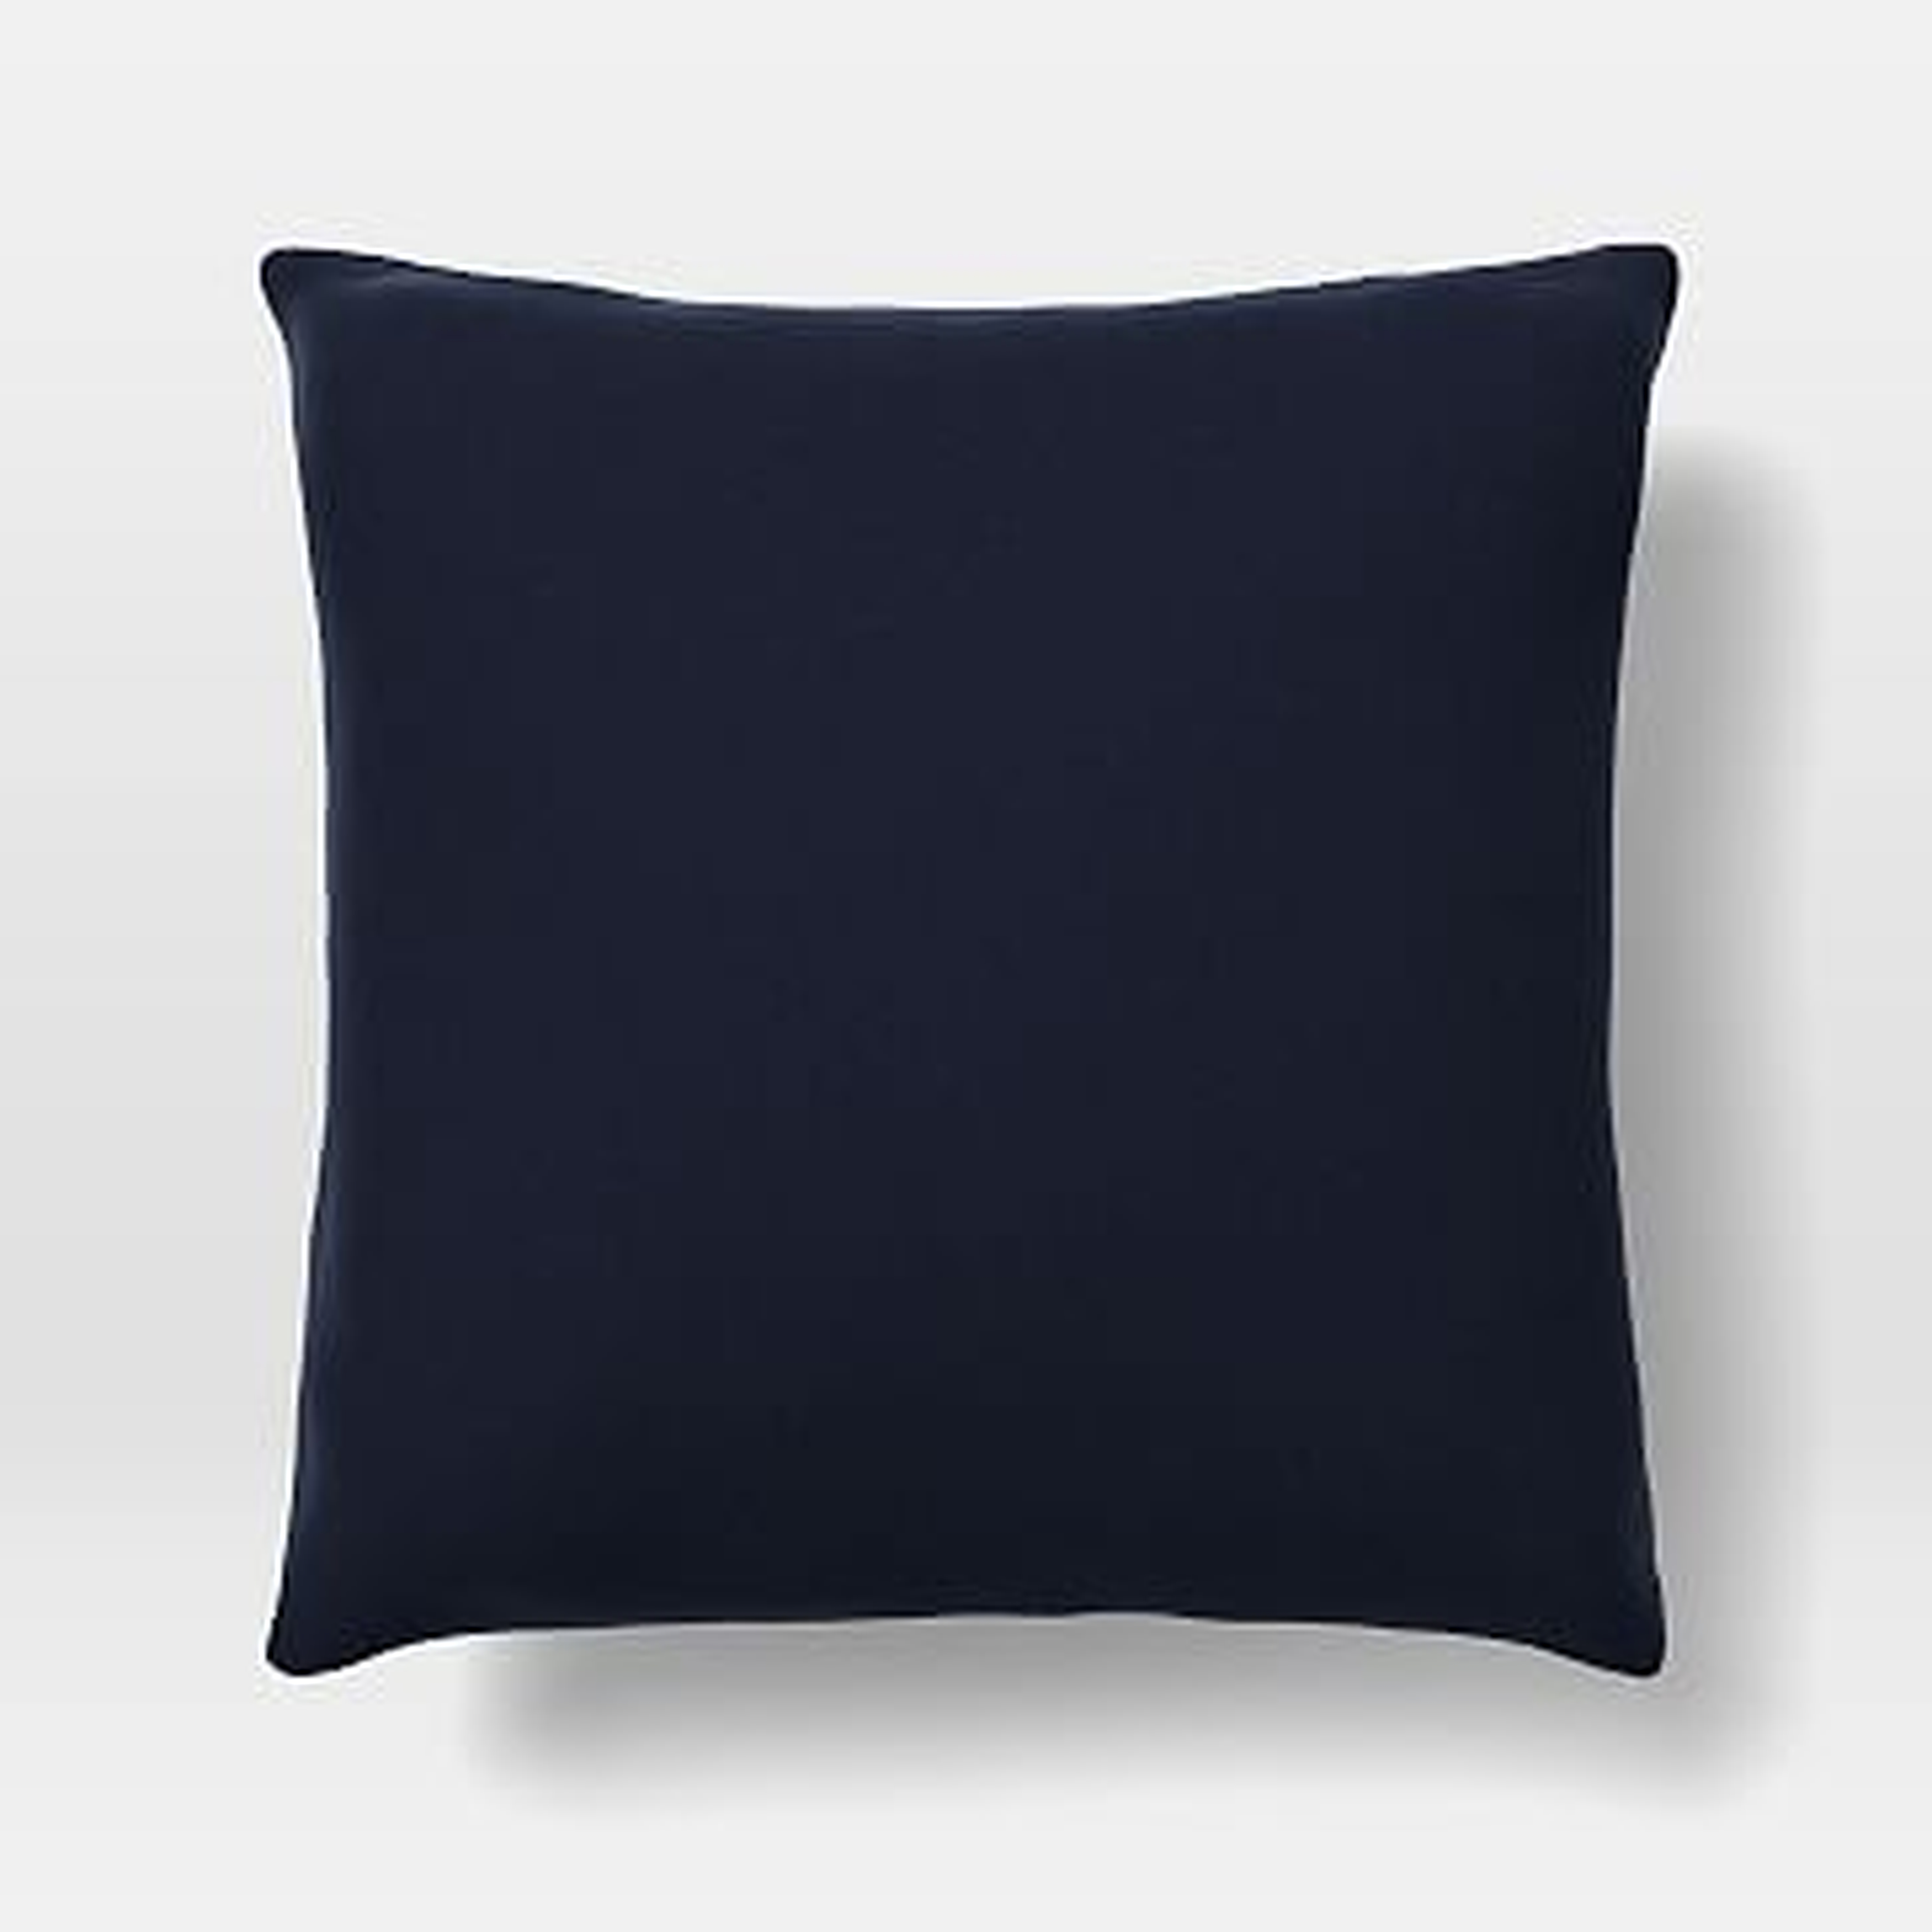 20"x 20" Pillow, Distressed Velvet, Ink Blue, N/A, N/A, - West Elm